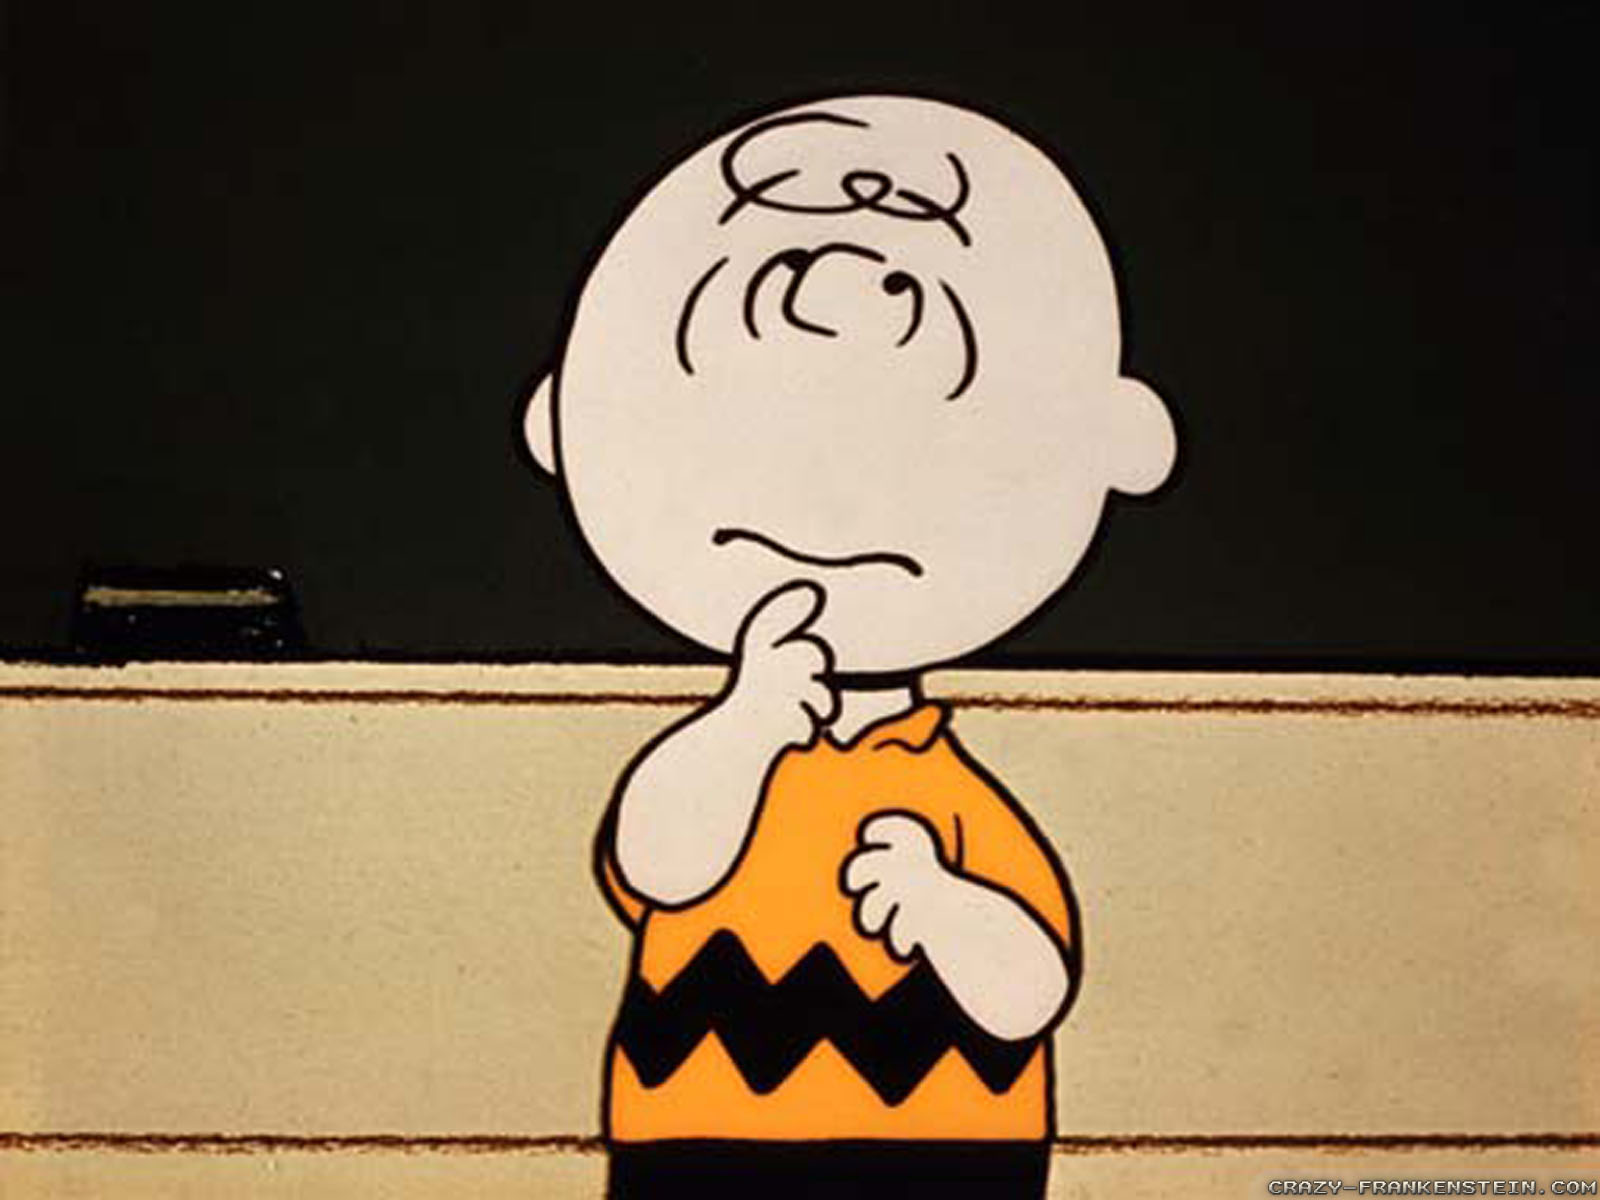 Charlie Brown Wallpaper